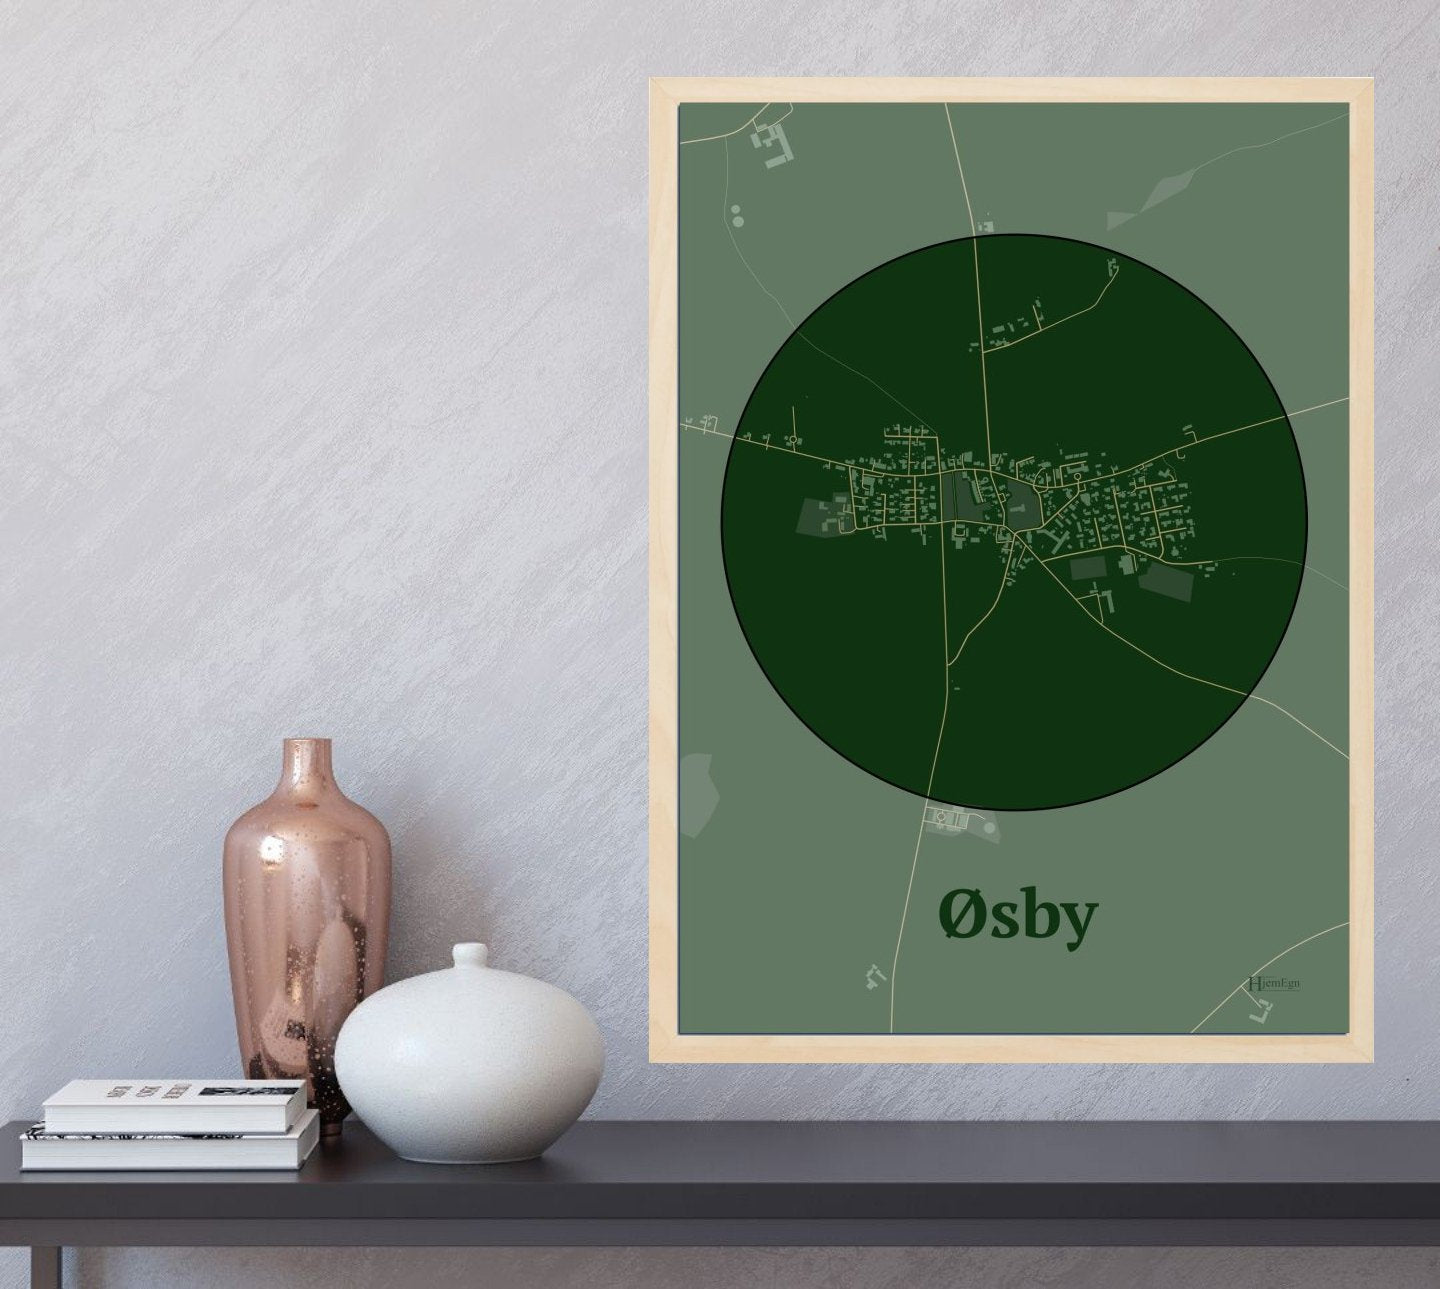 Øsby plakat i farve  og HjemEgn.dk design centrum. Design bykort for Øsby